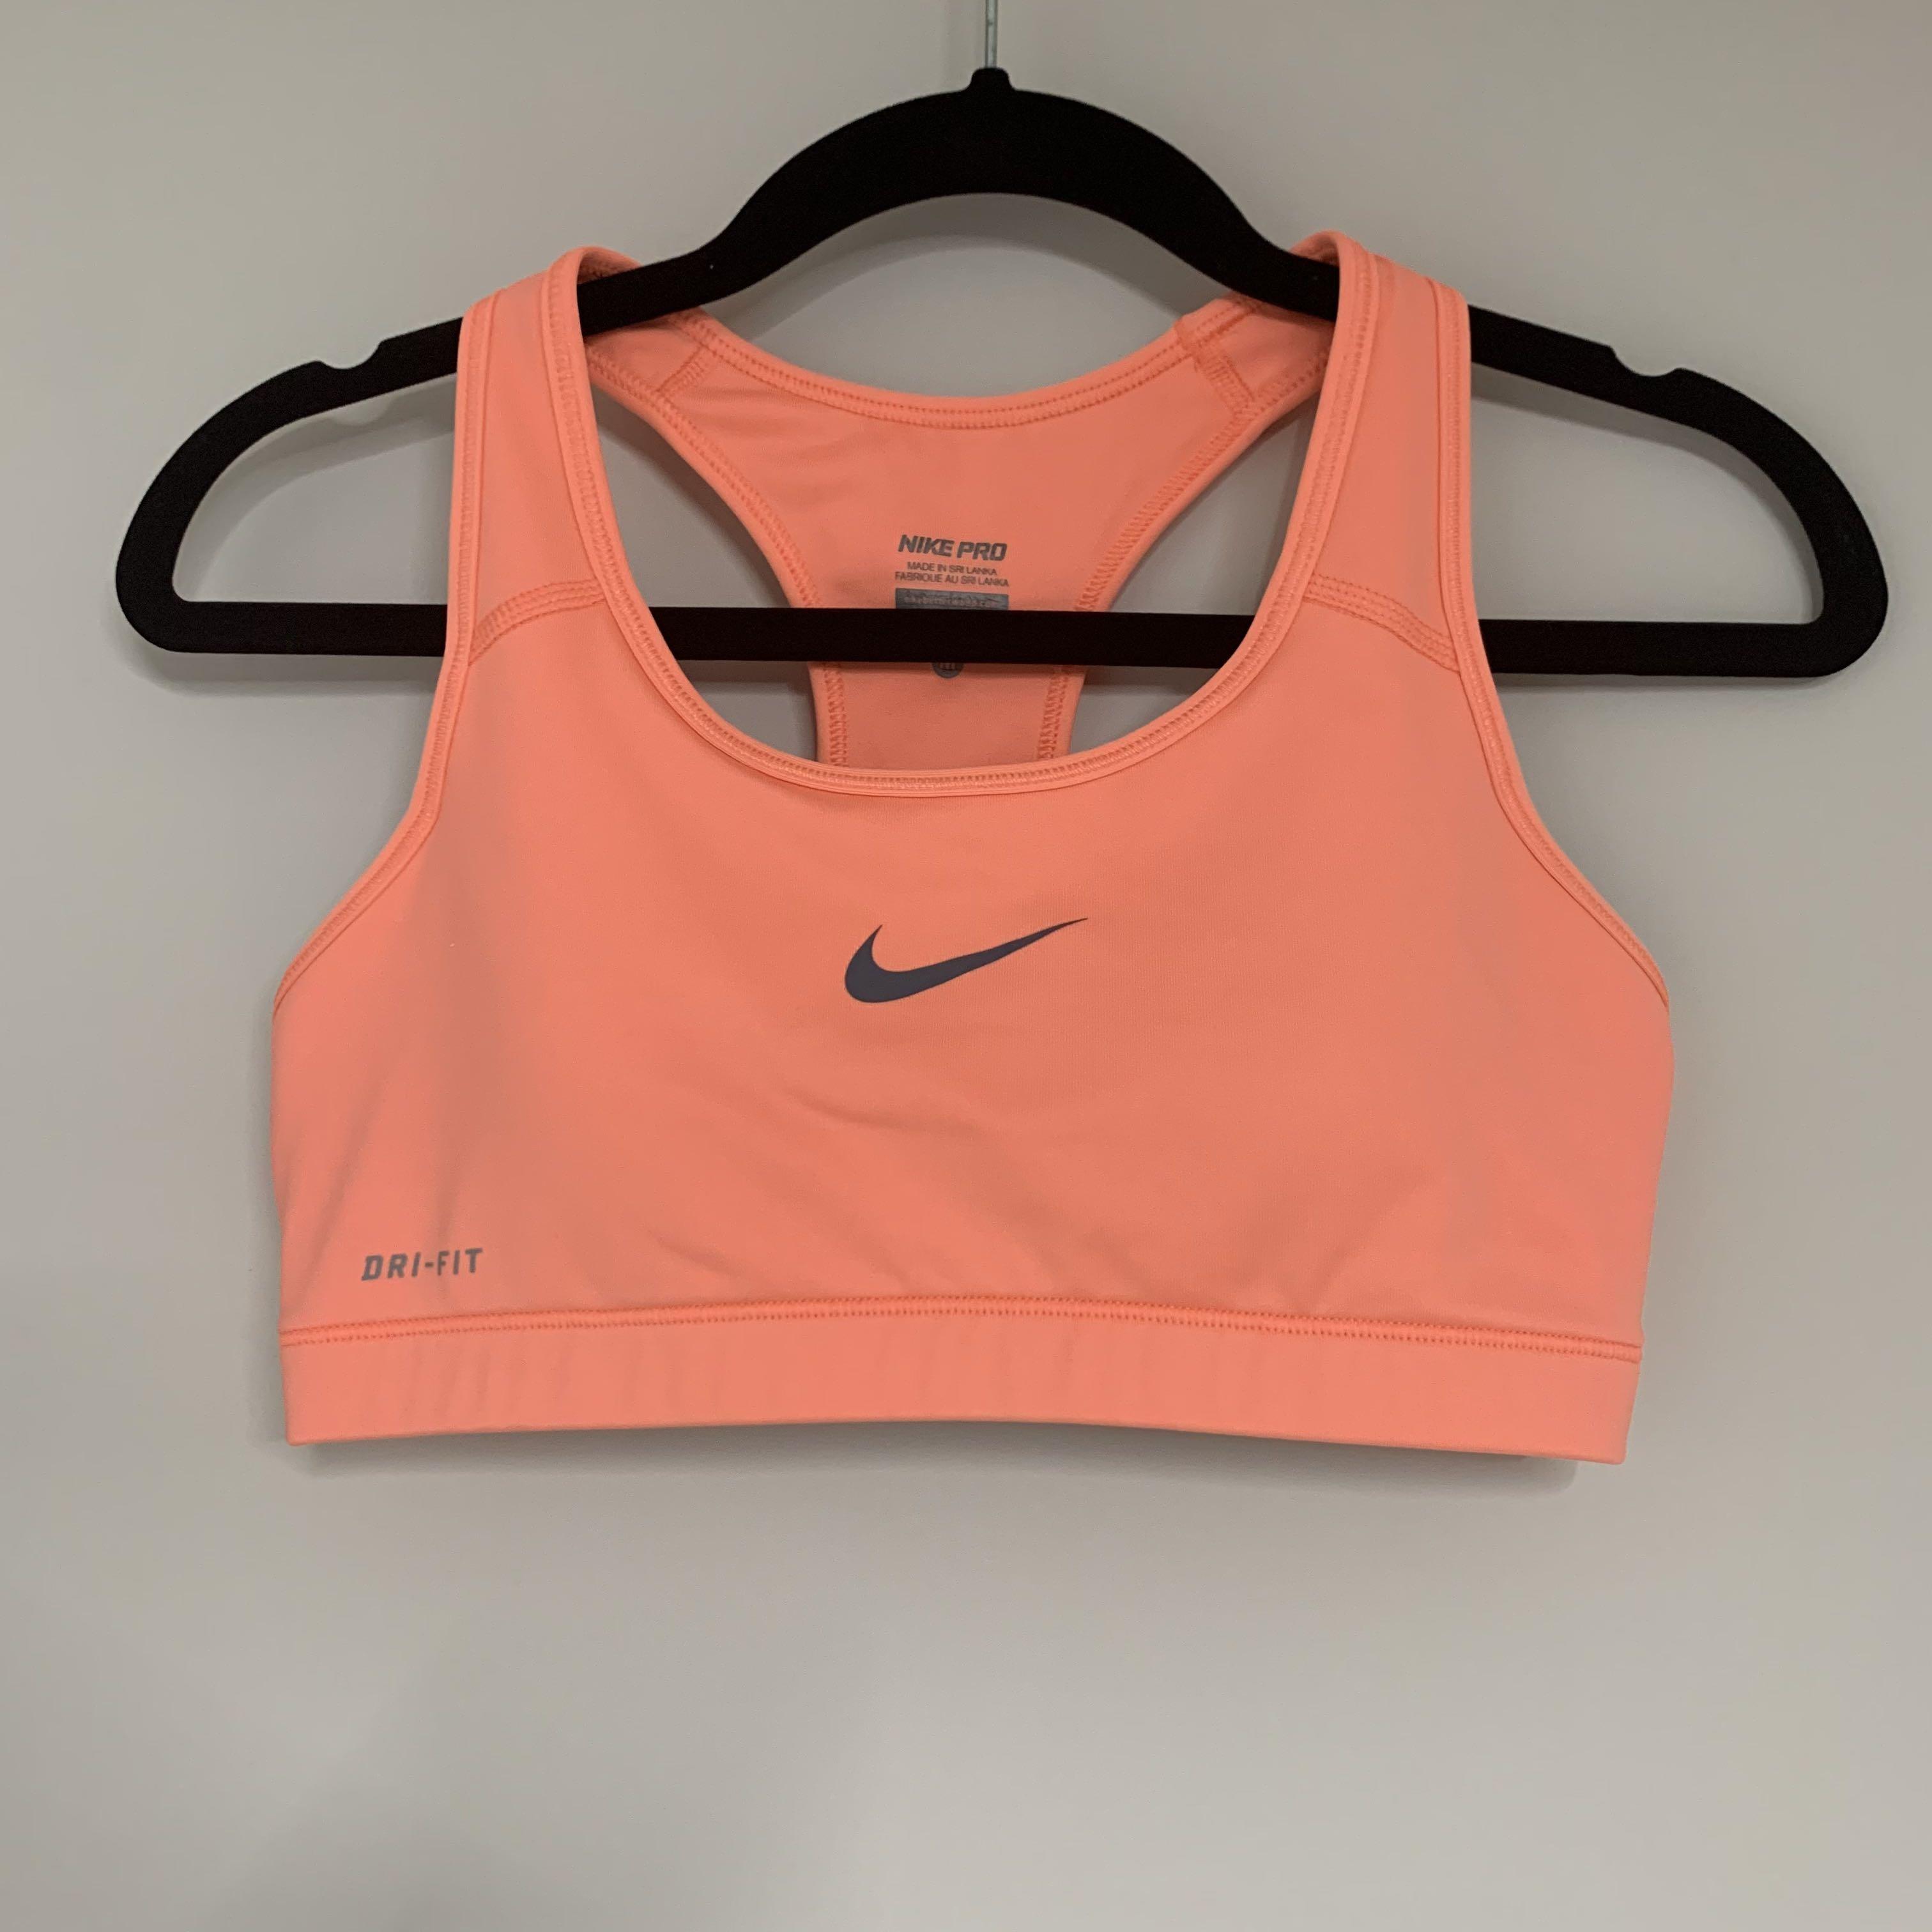 Nike Pro neon sports bra, Women's Fashion, Activewear on Carousell